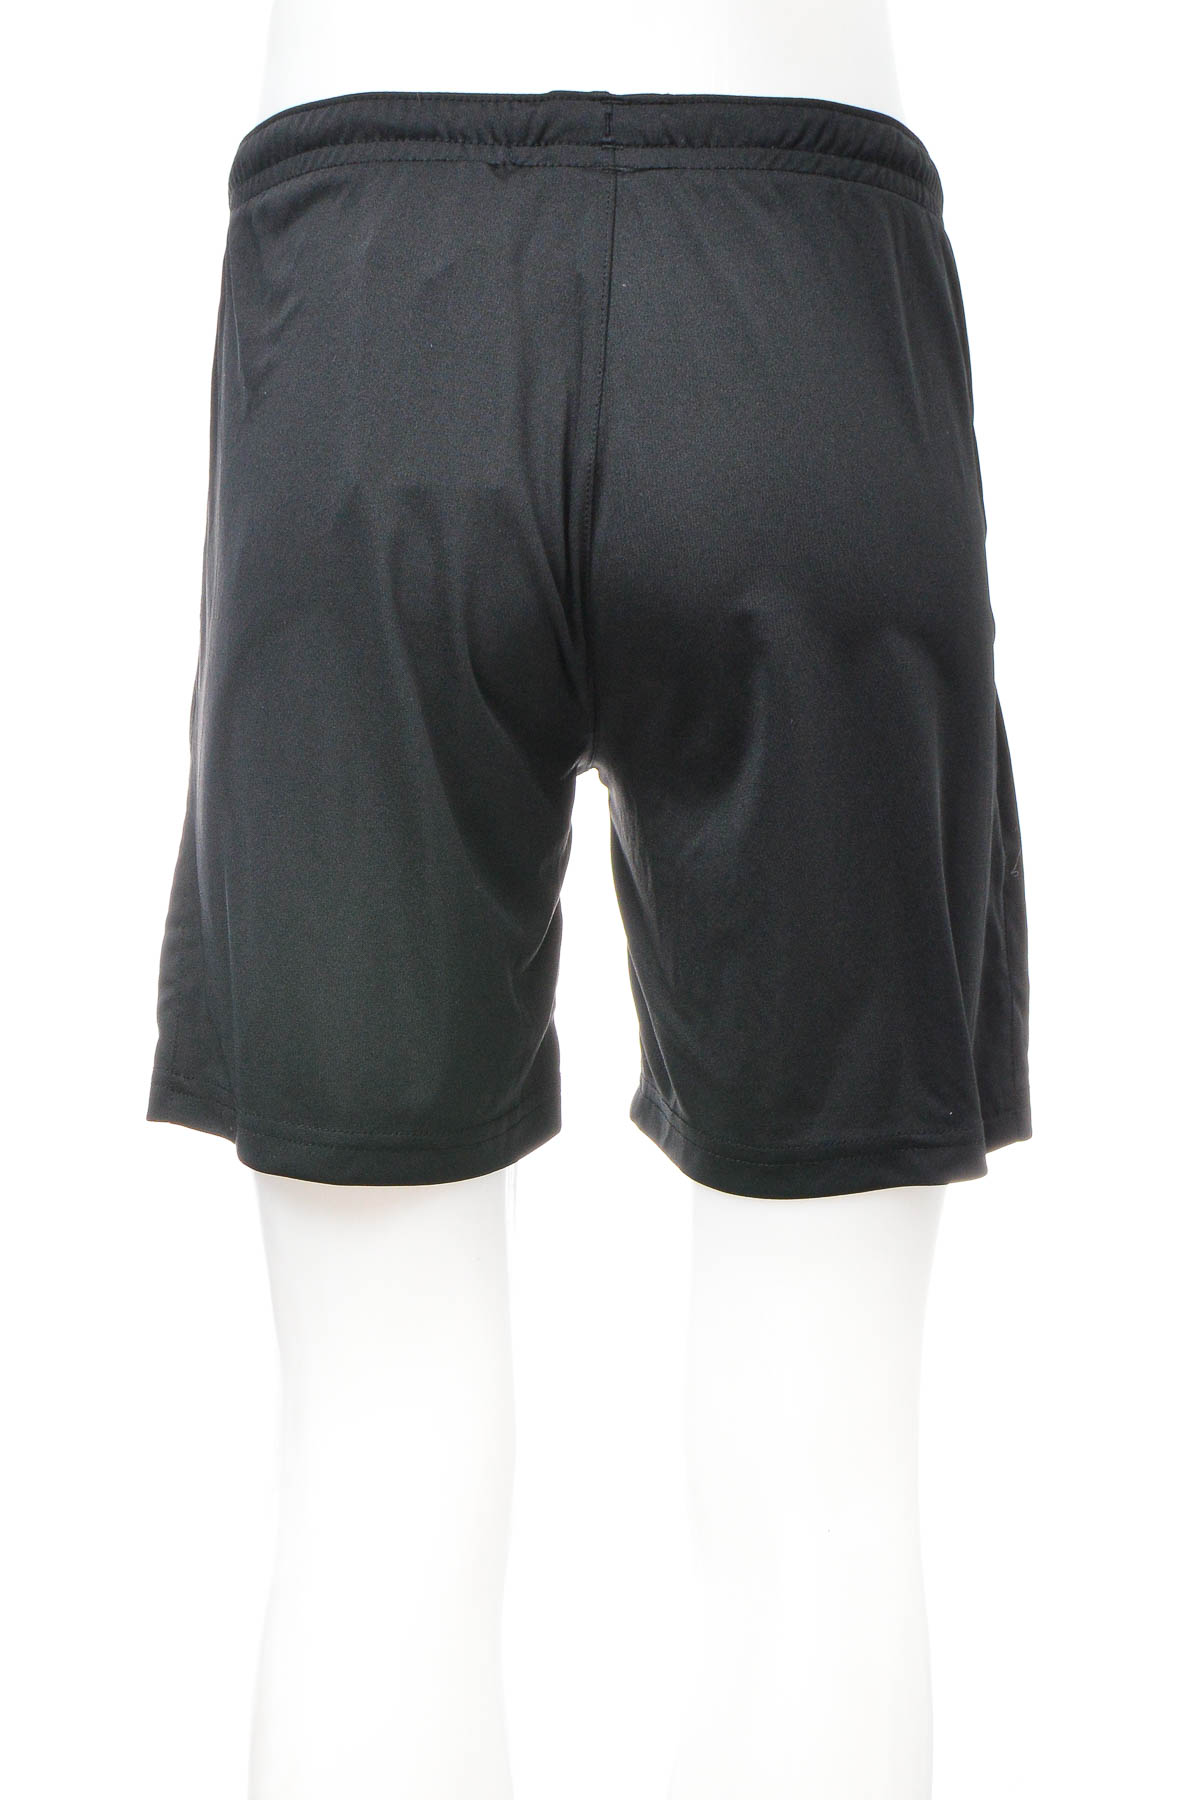 Shorts for boys - Erima - 1